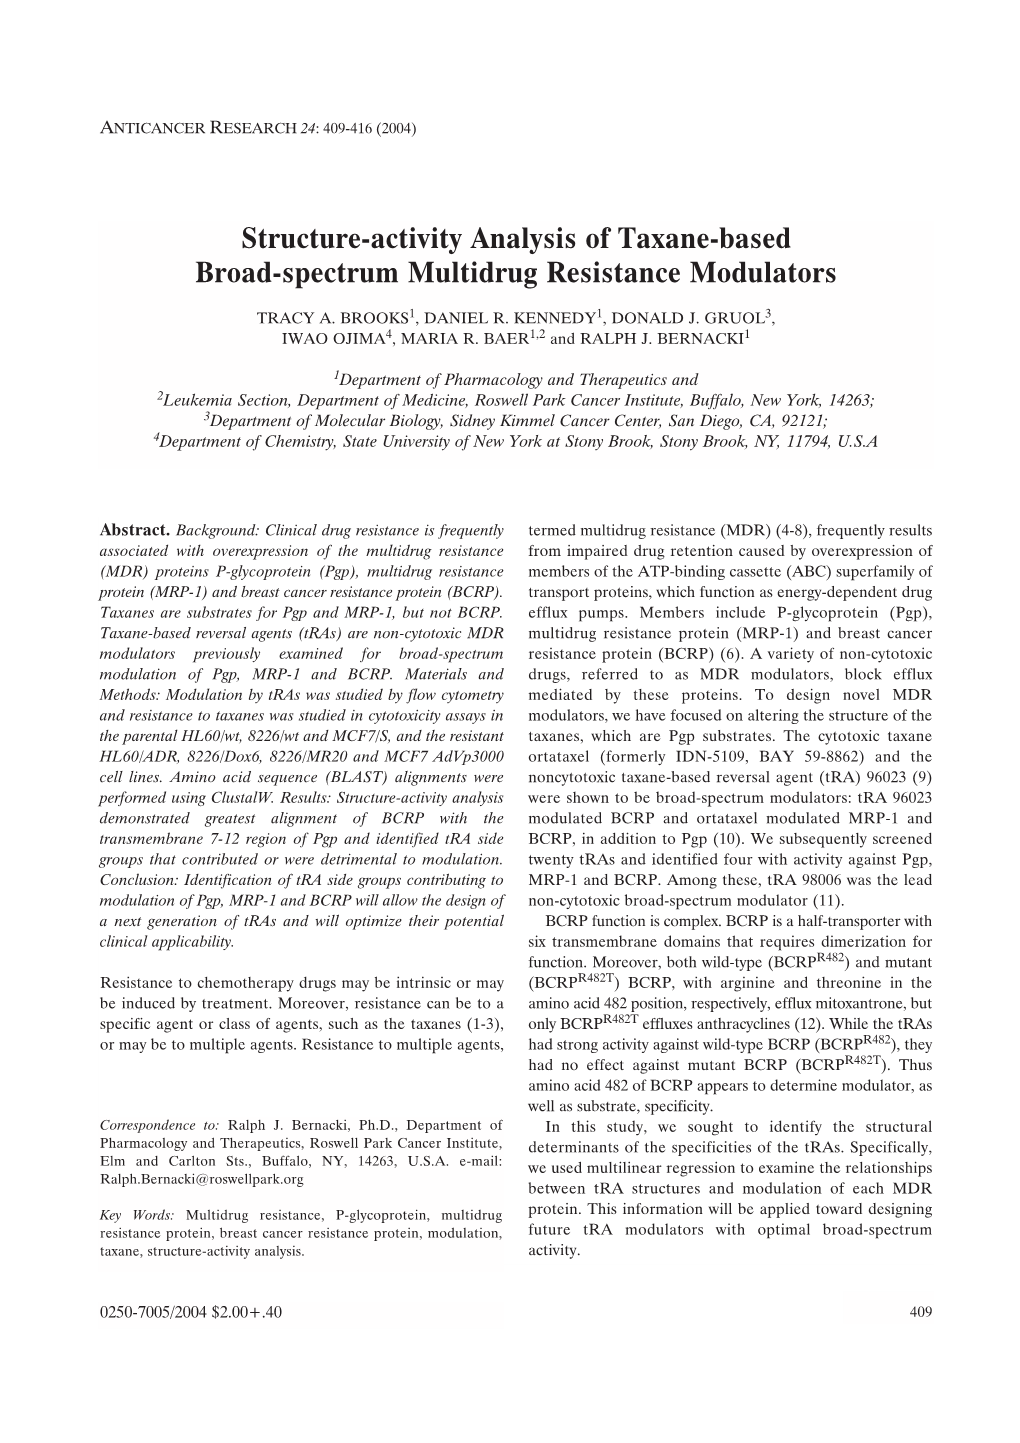 Structure-Activity Analysis of Taxane-Based Broad-Spectrum Multidrug Resistance Modulators